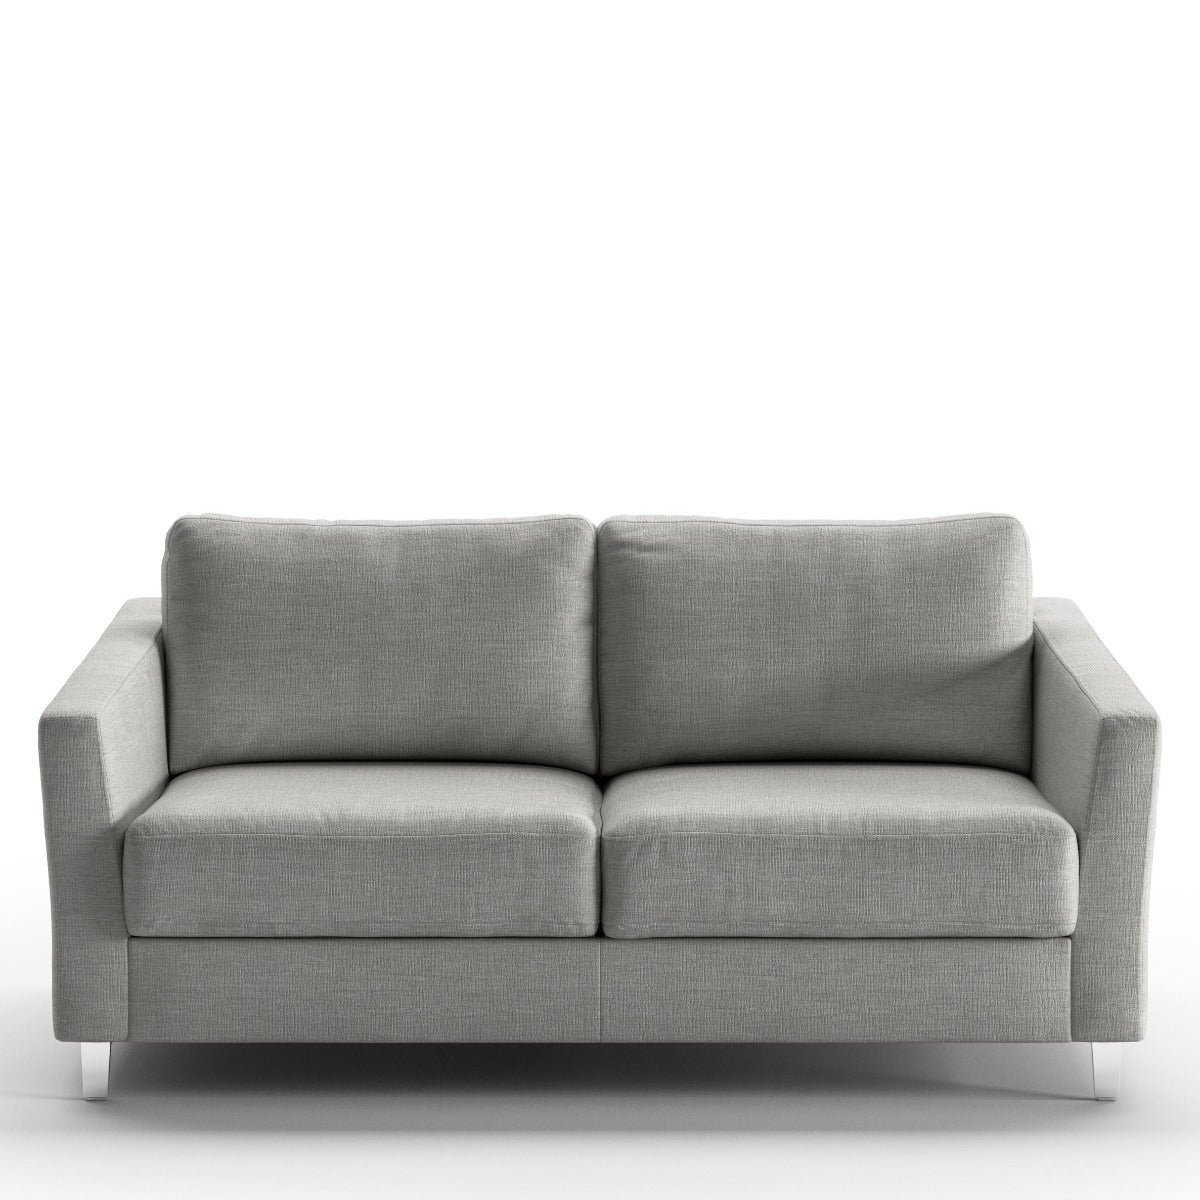 Luonto Furniture Monika Full XL Loveseat Sleeper - Oliver 173 -234/9 Chrome